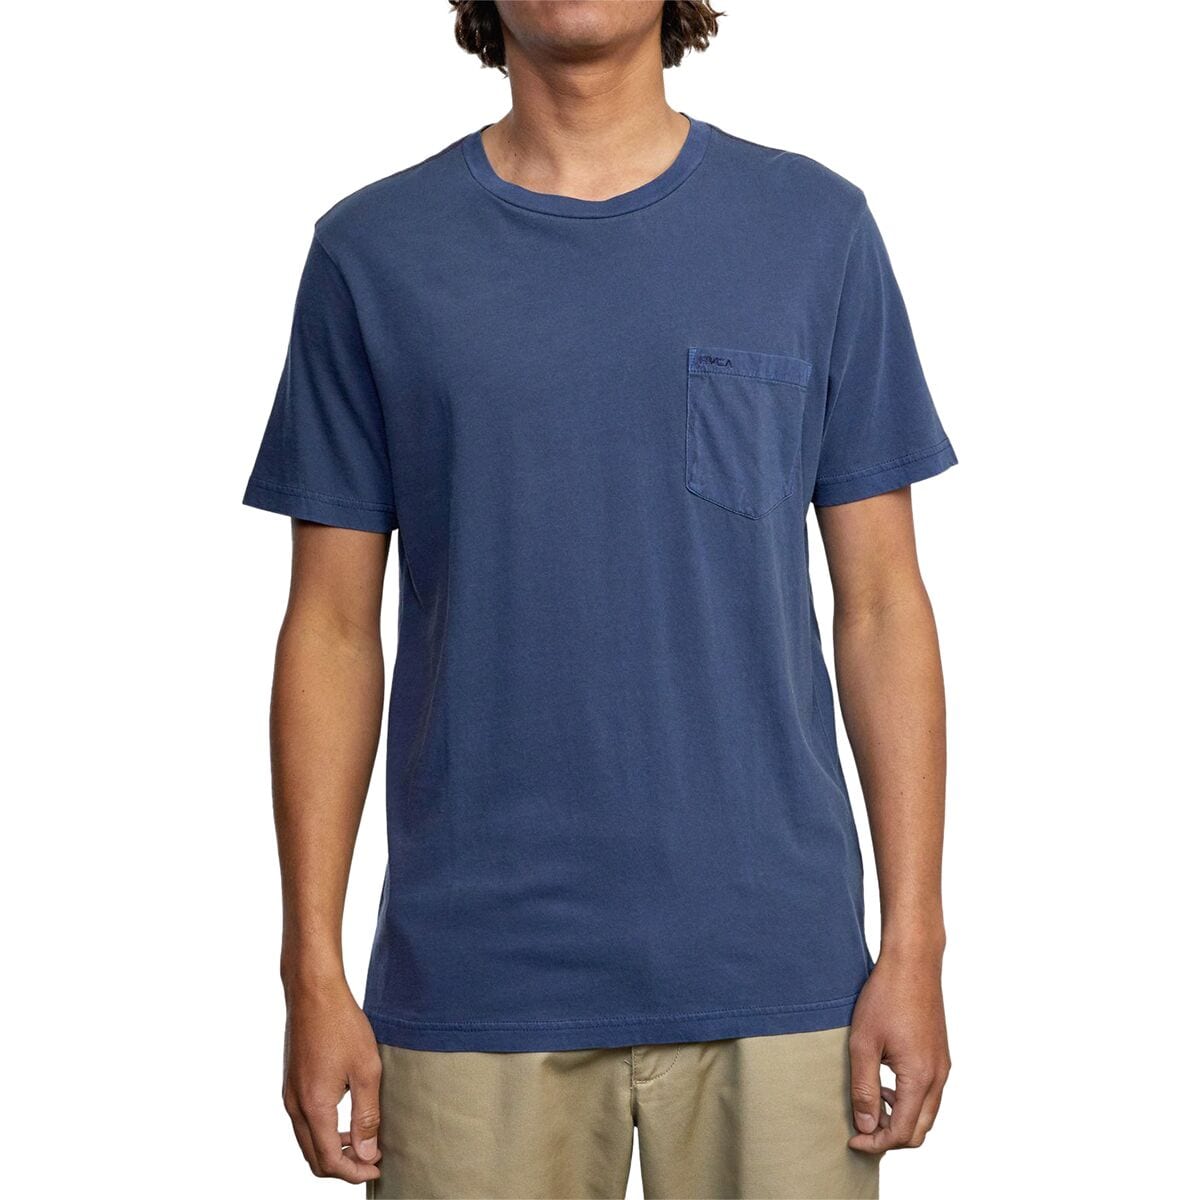 PTC 2 Pigment T-Shirt - Men